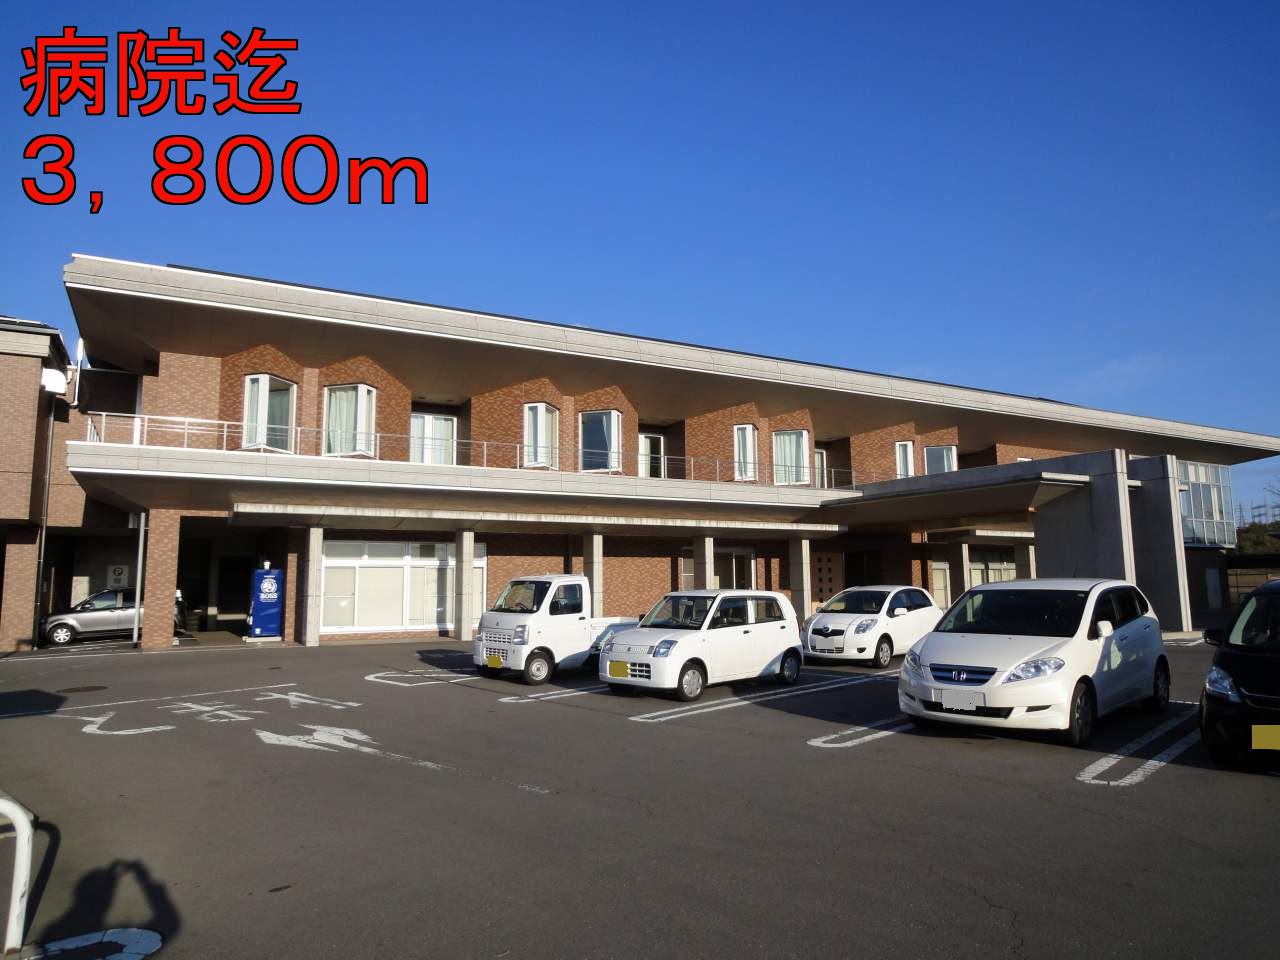 Hospital. Tomi City Hospital (hospital) to 3800m